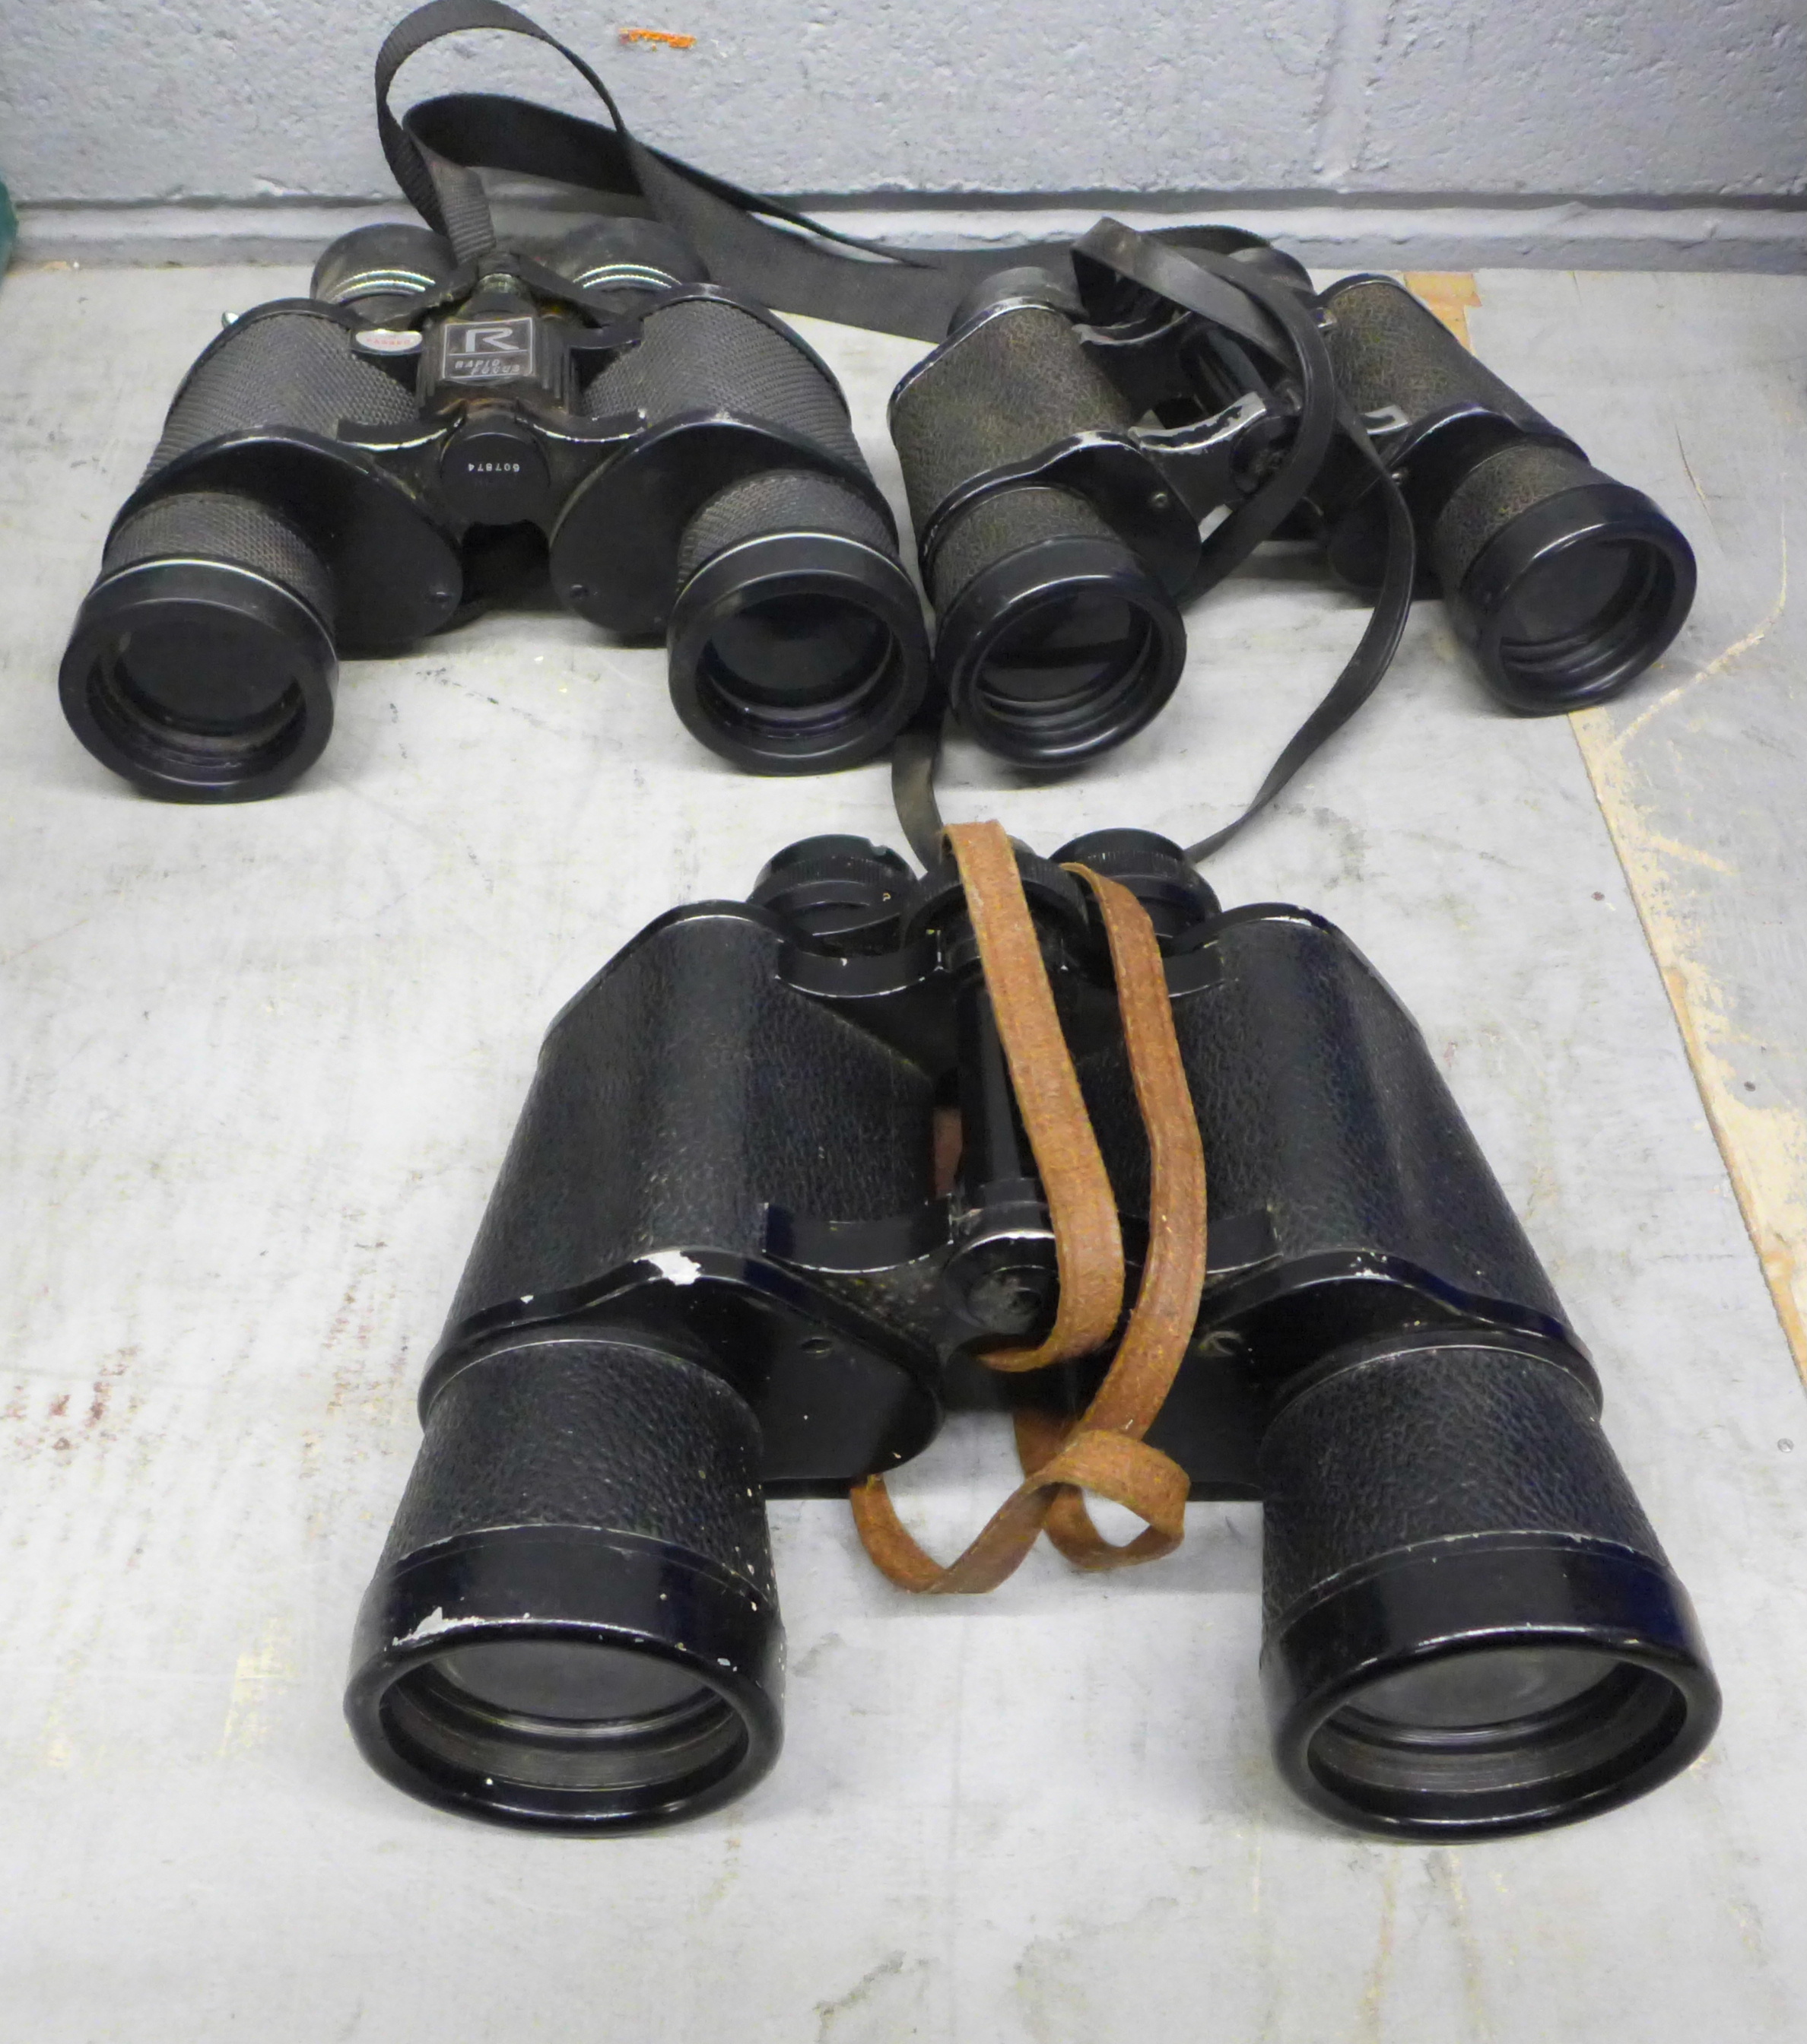 A Vivitar Series 1 70-210mm camera lens, other lenses, binoculars including Deraisme Militaire, - Image 2 of 4